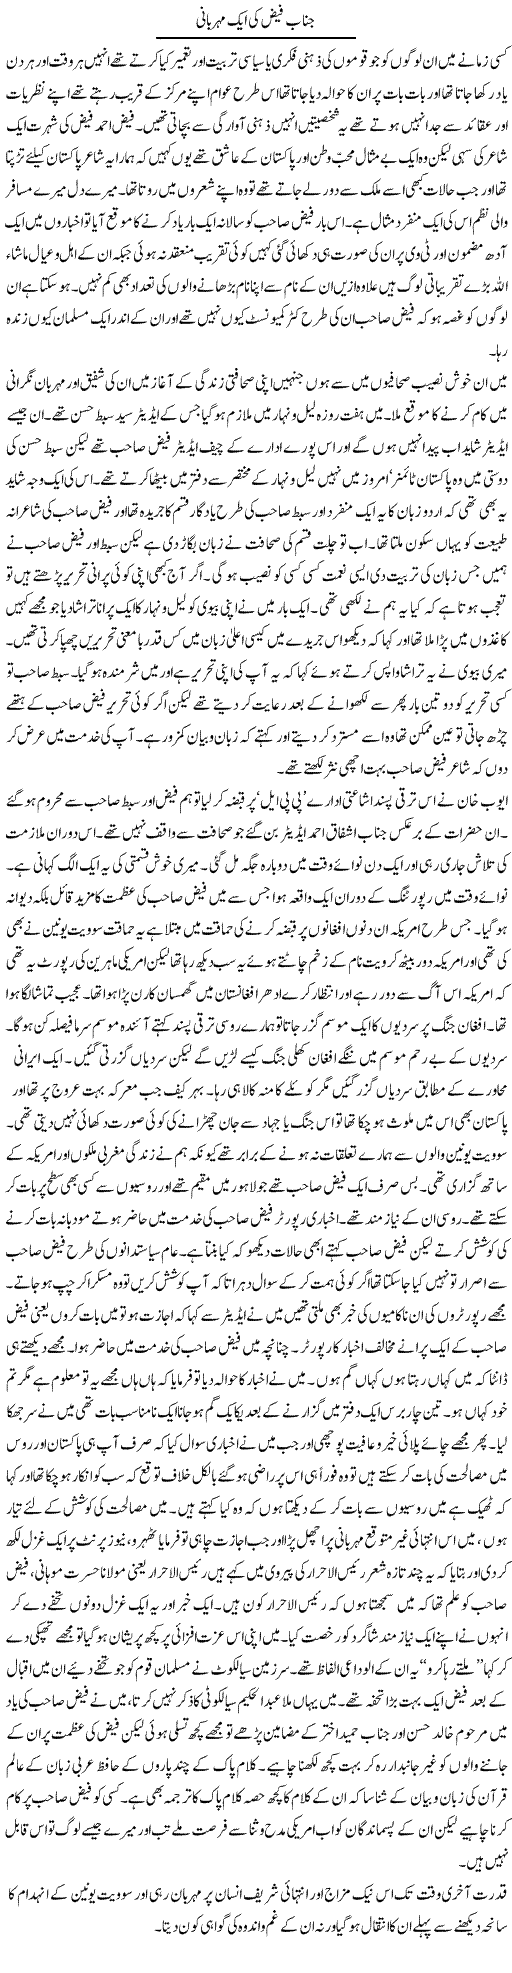 Mr Faiz Express Column Abdul Qadir 23 November 2010